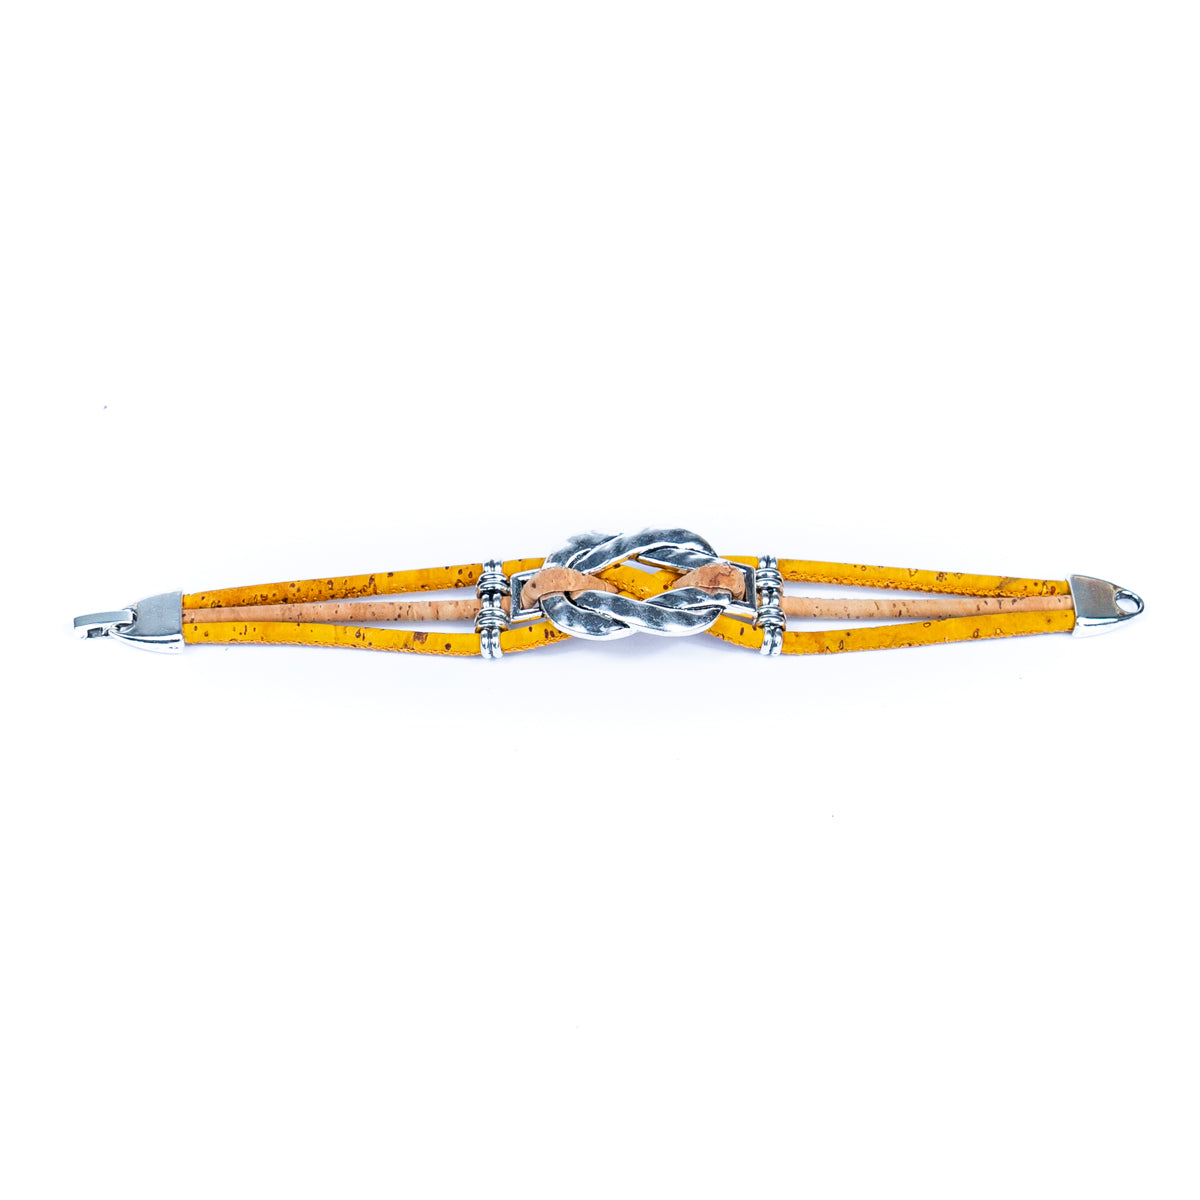 Round Colorful Cork Cord w/ Threads & Braided Shape Handmade Women's Bracelet BR-461-MIX-5